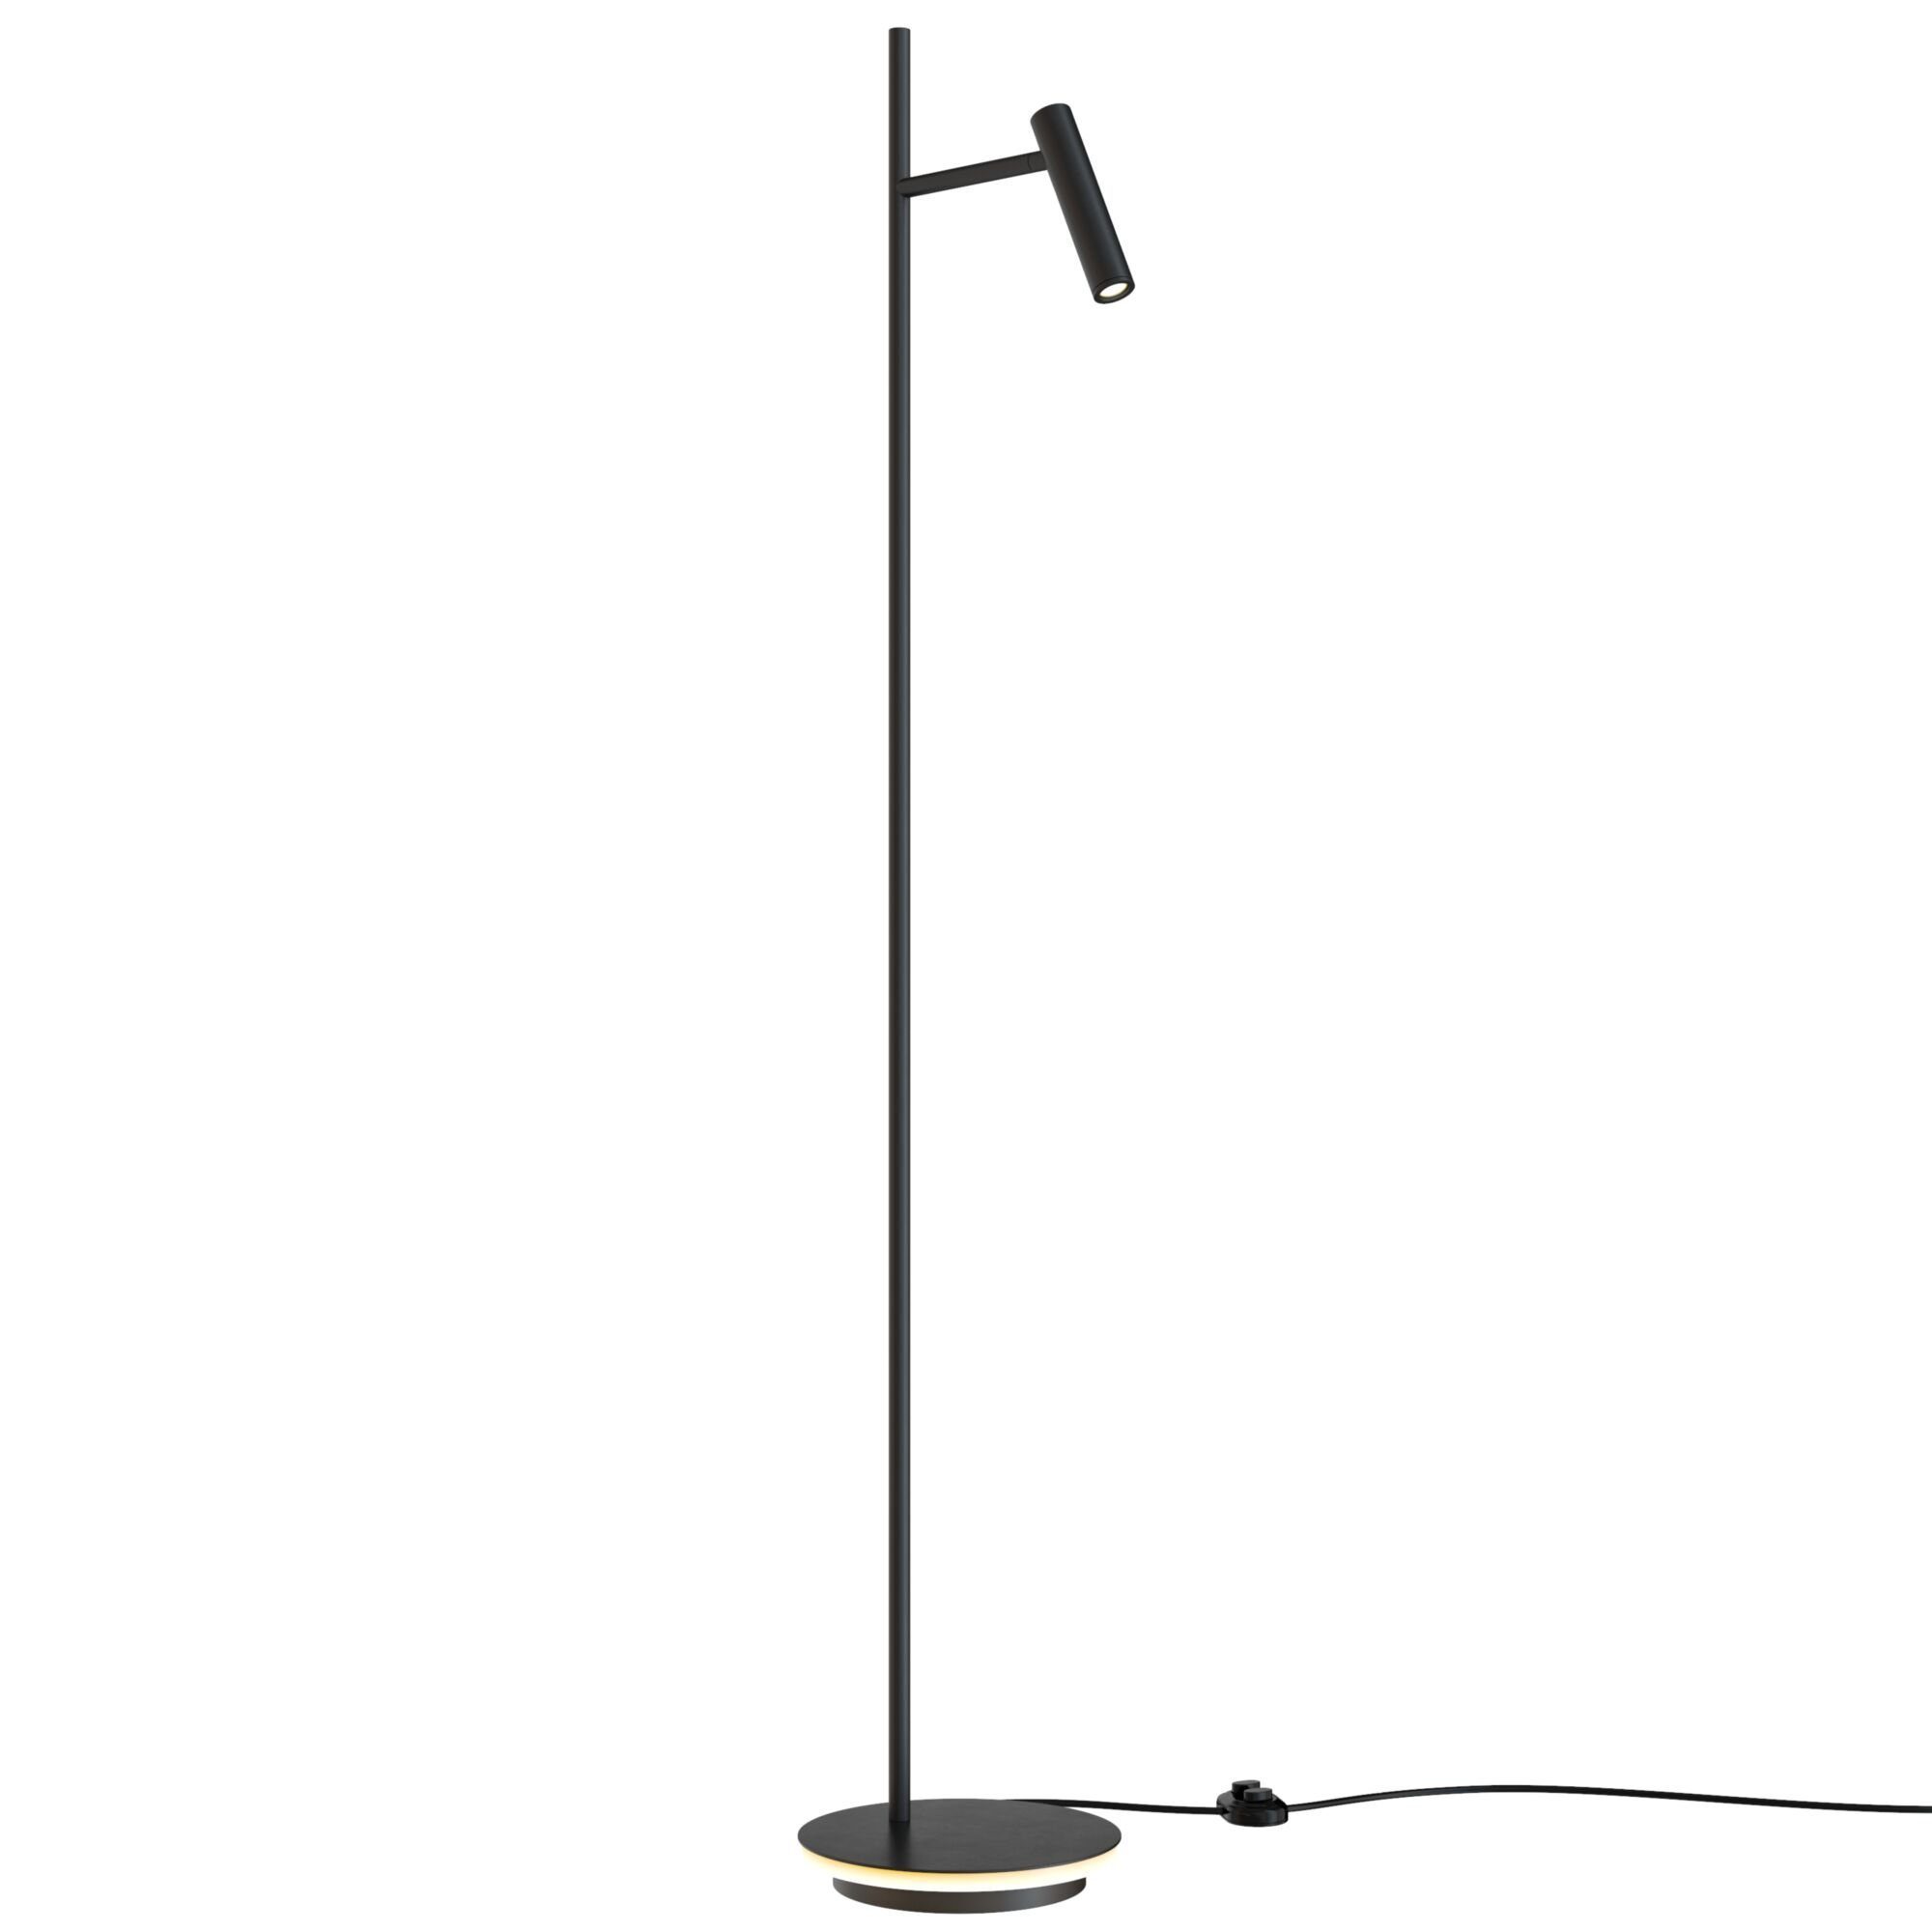 MAYTONI DECORATIVE LIGHTING Lampe 30.5x138.7x24 Stehlampe LED hochwertige cm, Raumobjekt dekoratives Estudo & fest Design integriert